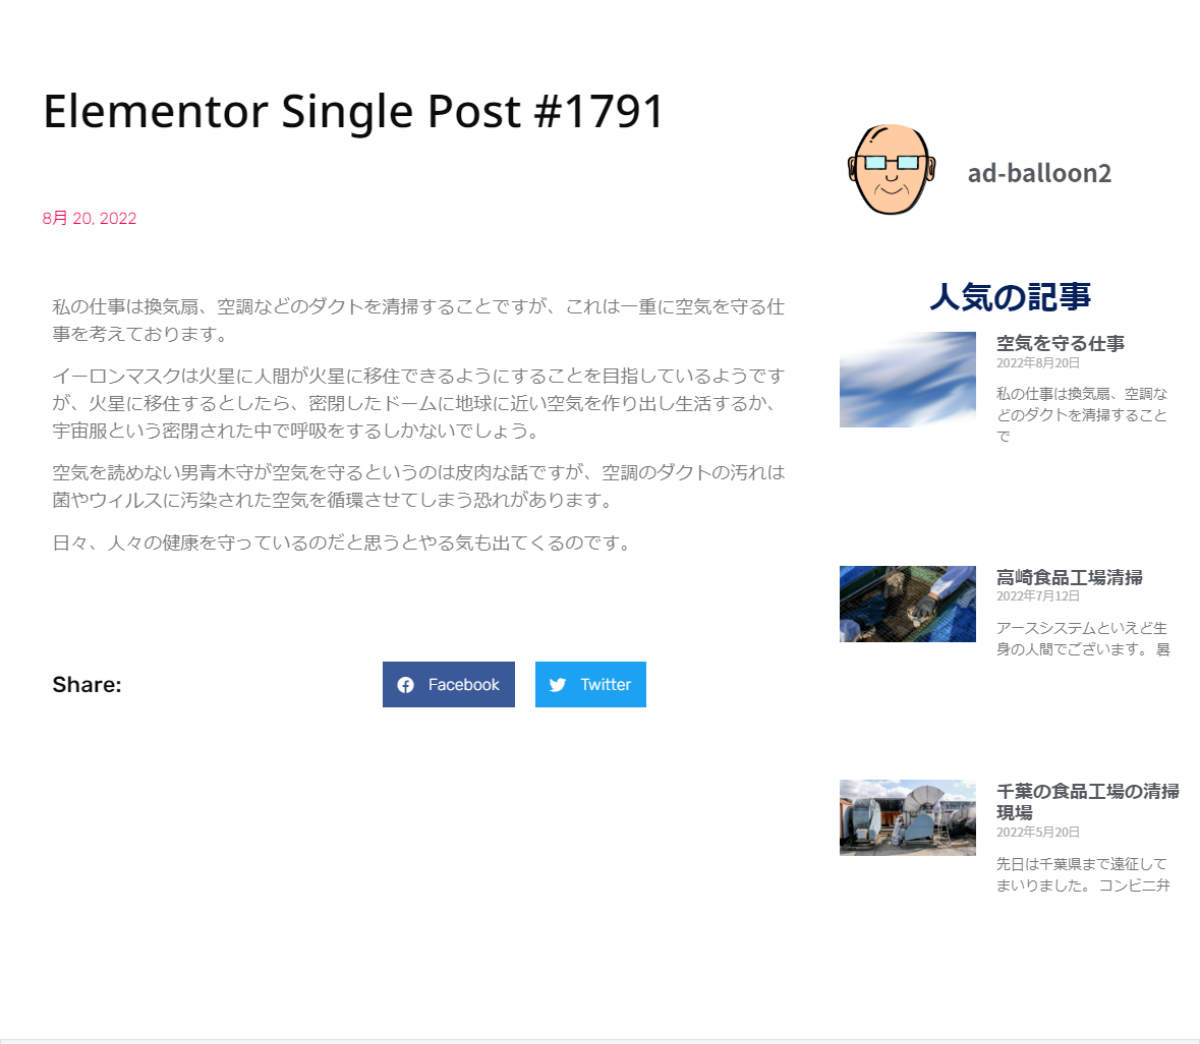 Elementor-post-screenshot_1791_2022-10-19-09-45-32_2ea1b43a.png